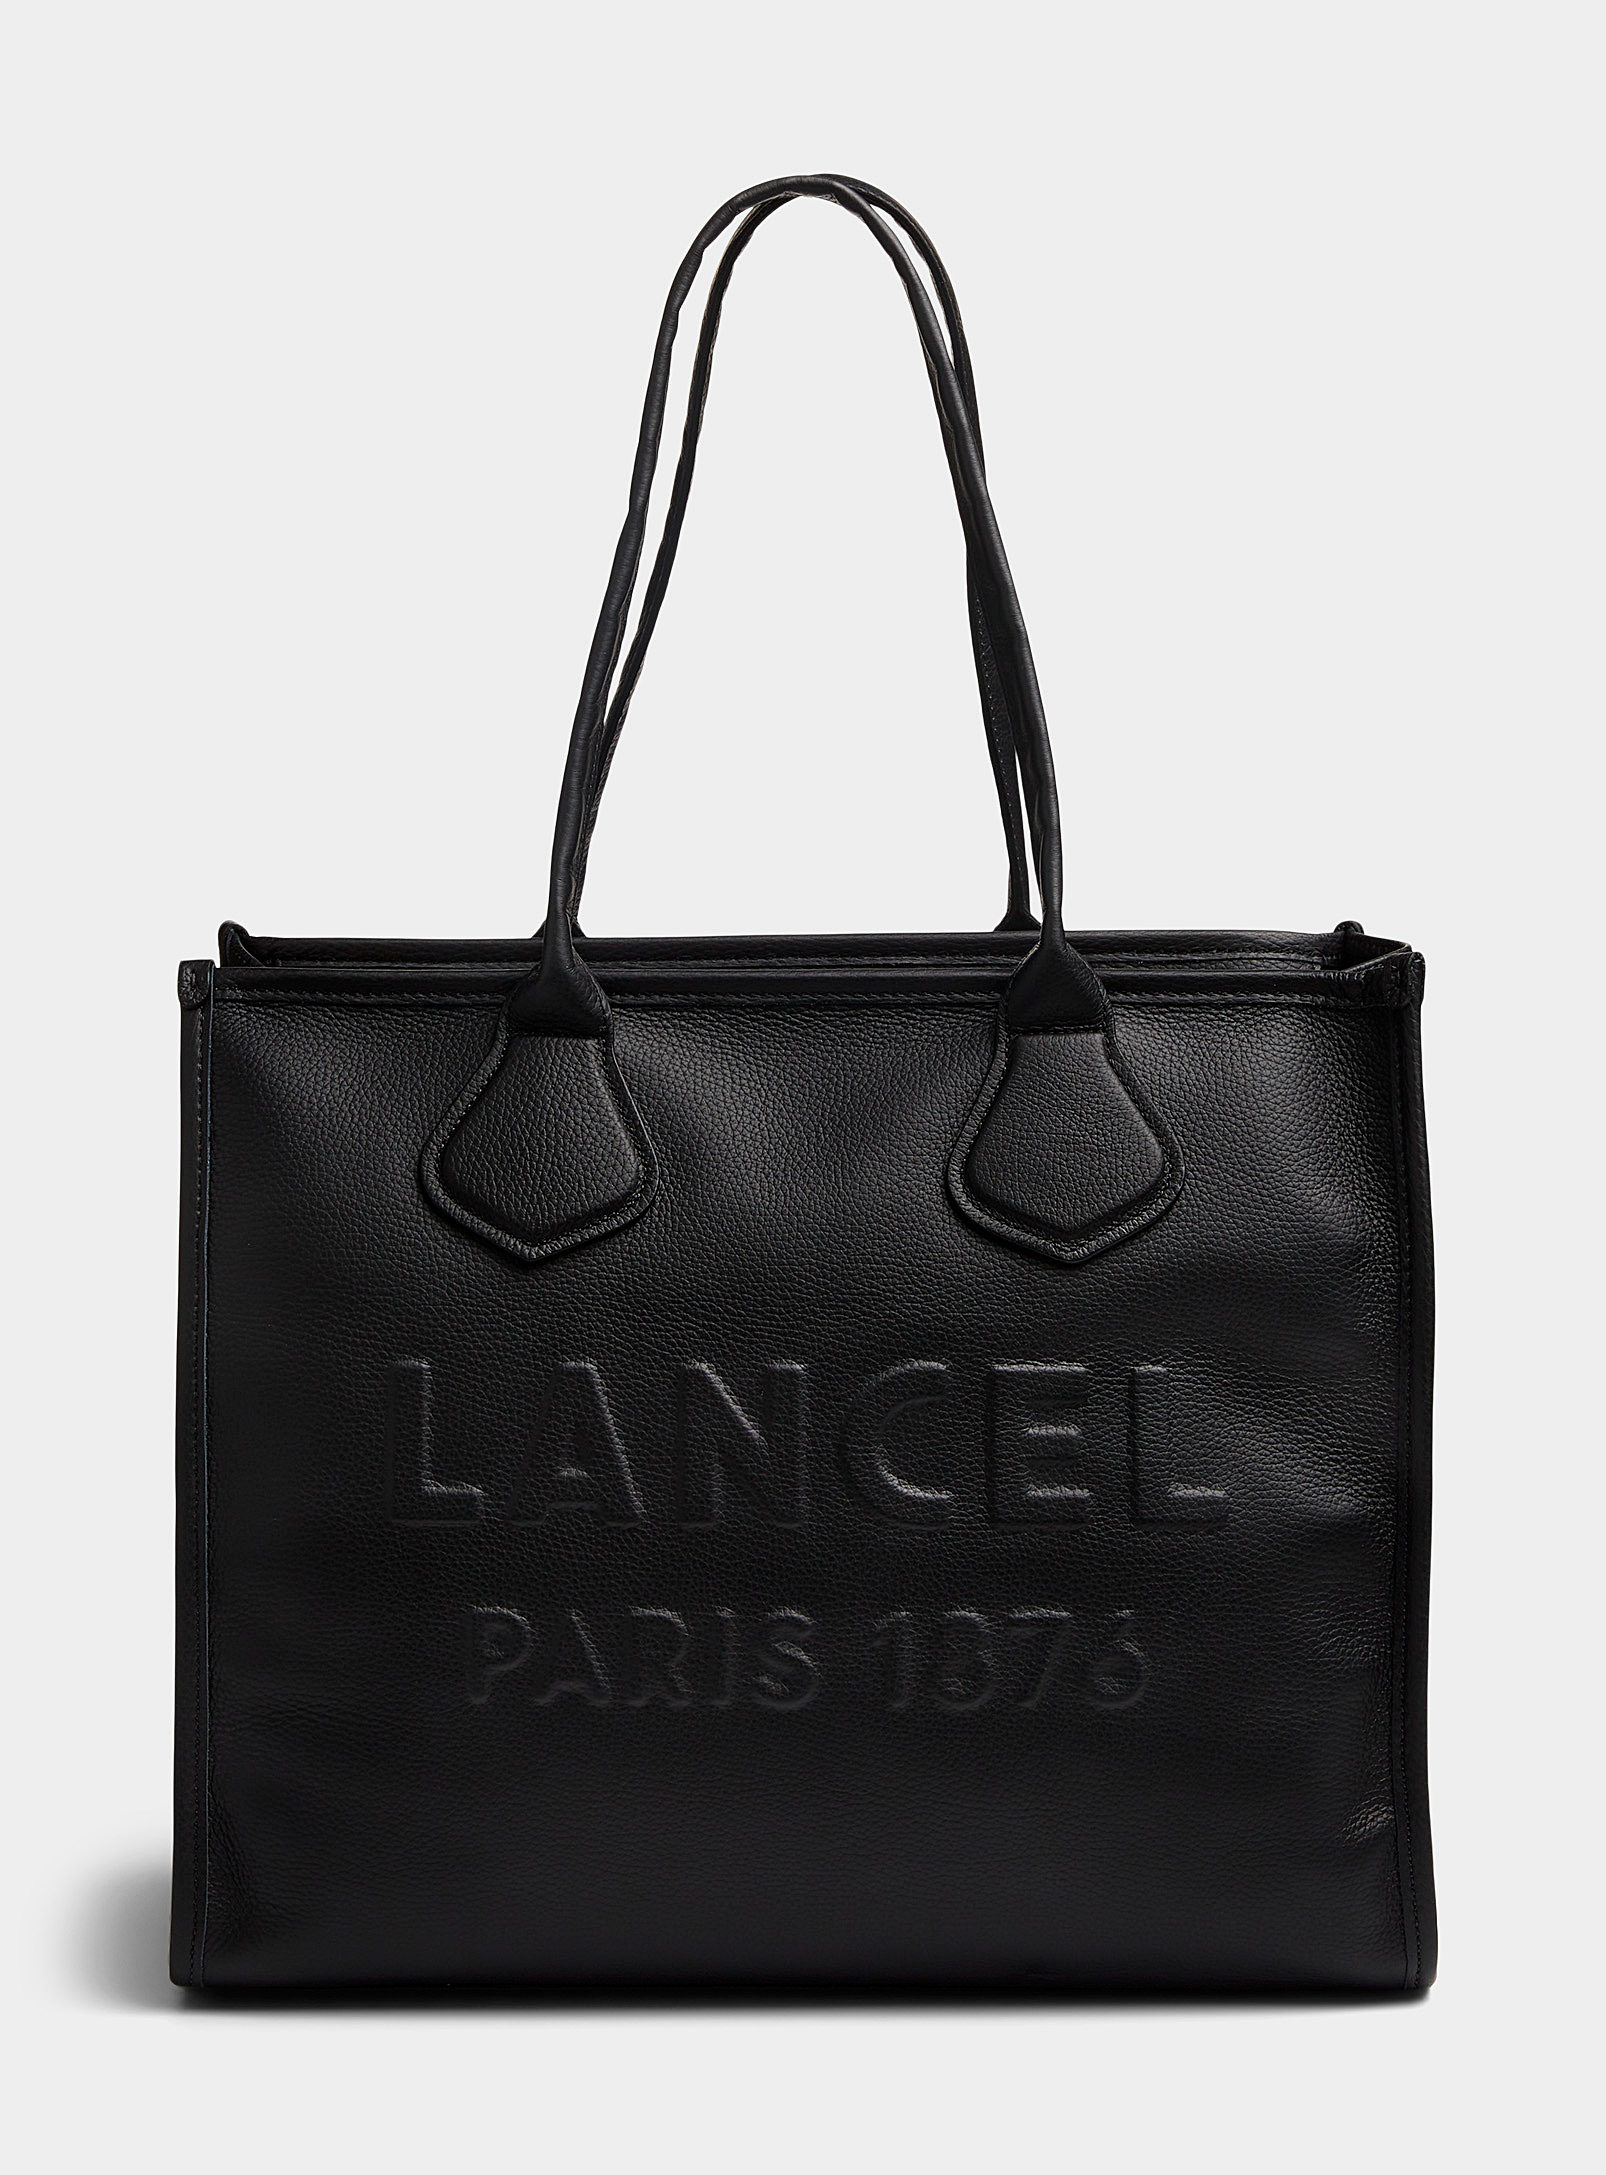 Lancel - Women's Jour signature minimalist leather Tote Bag